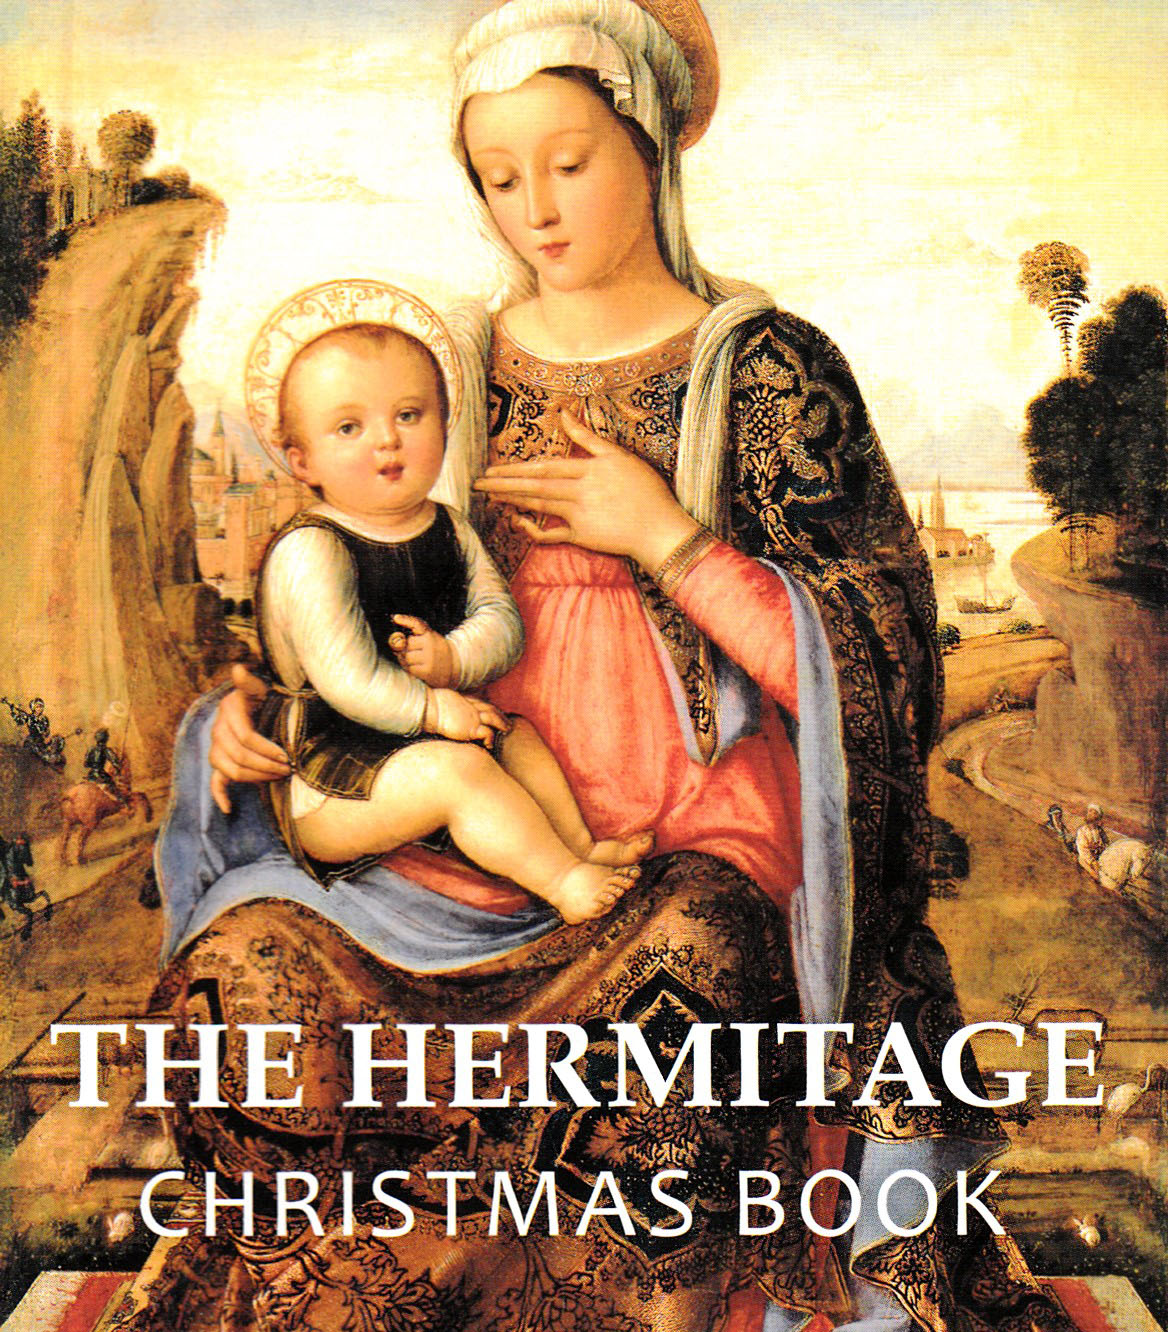  The Hermitage. Christmas book (pb)